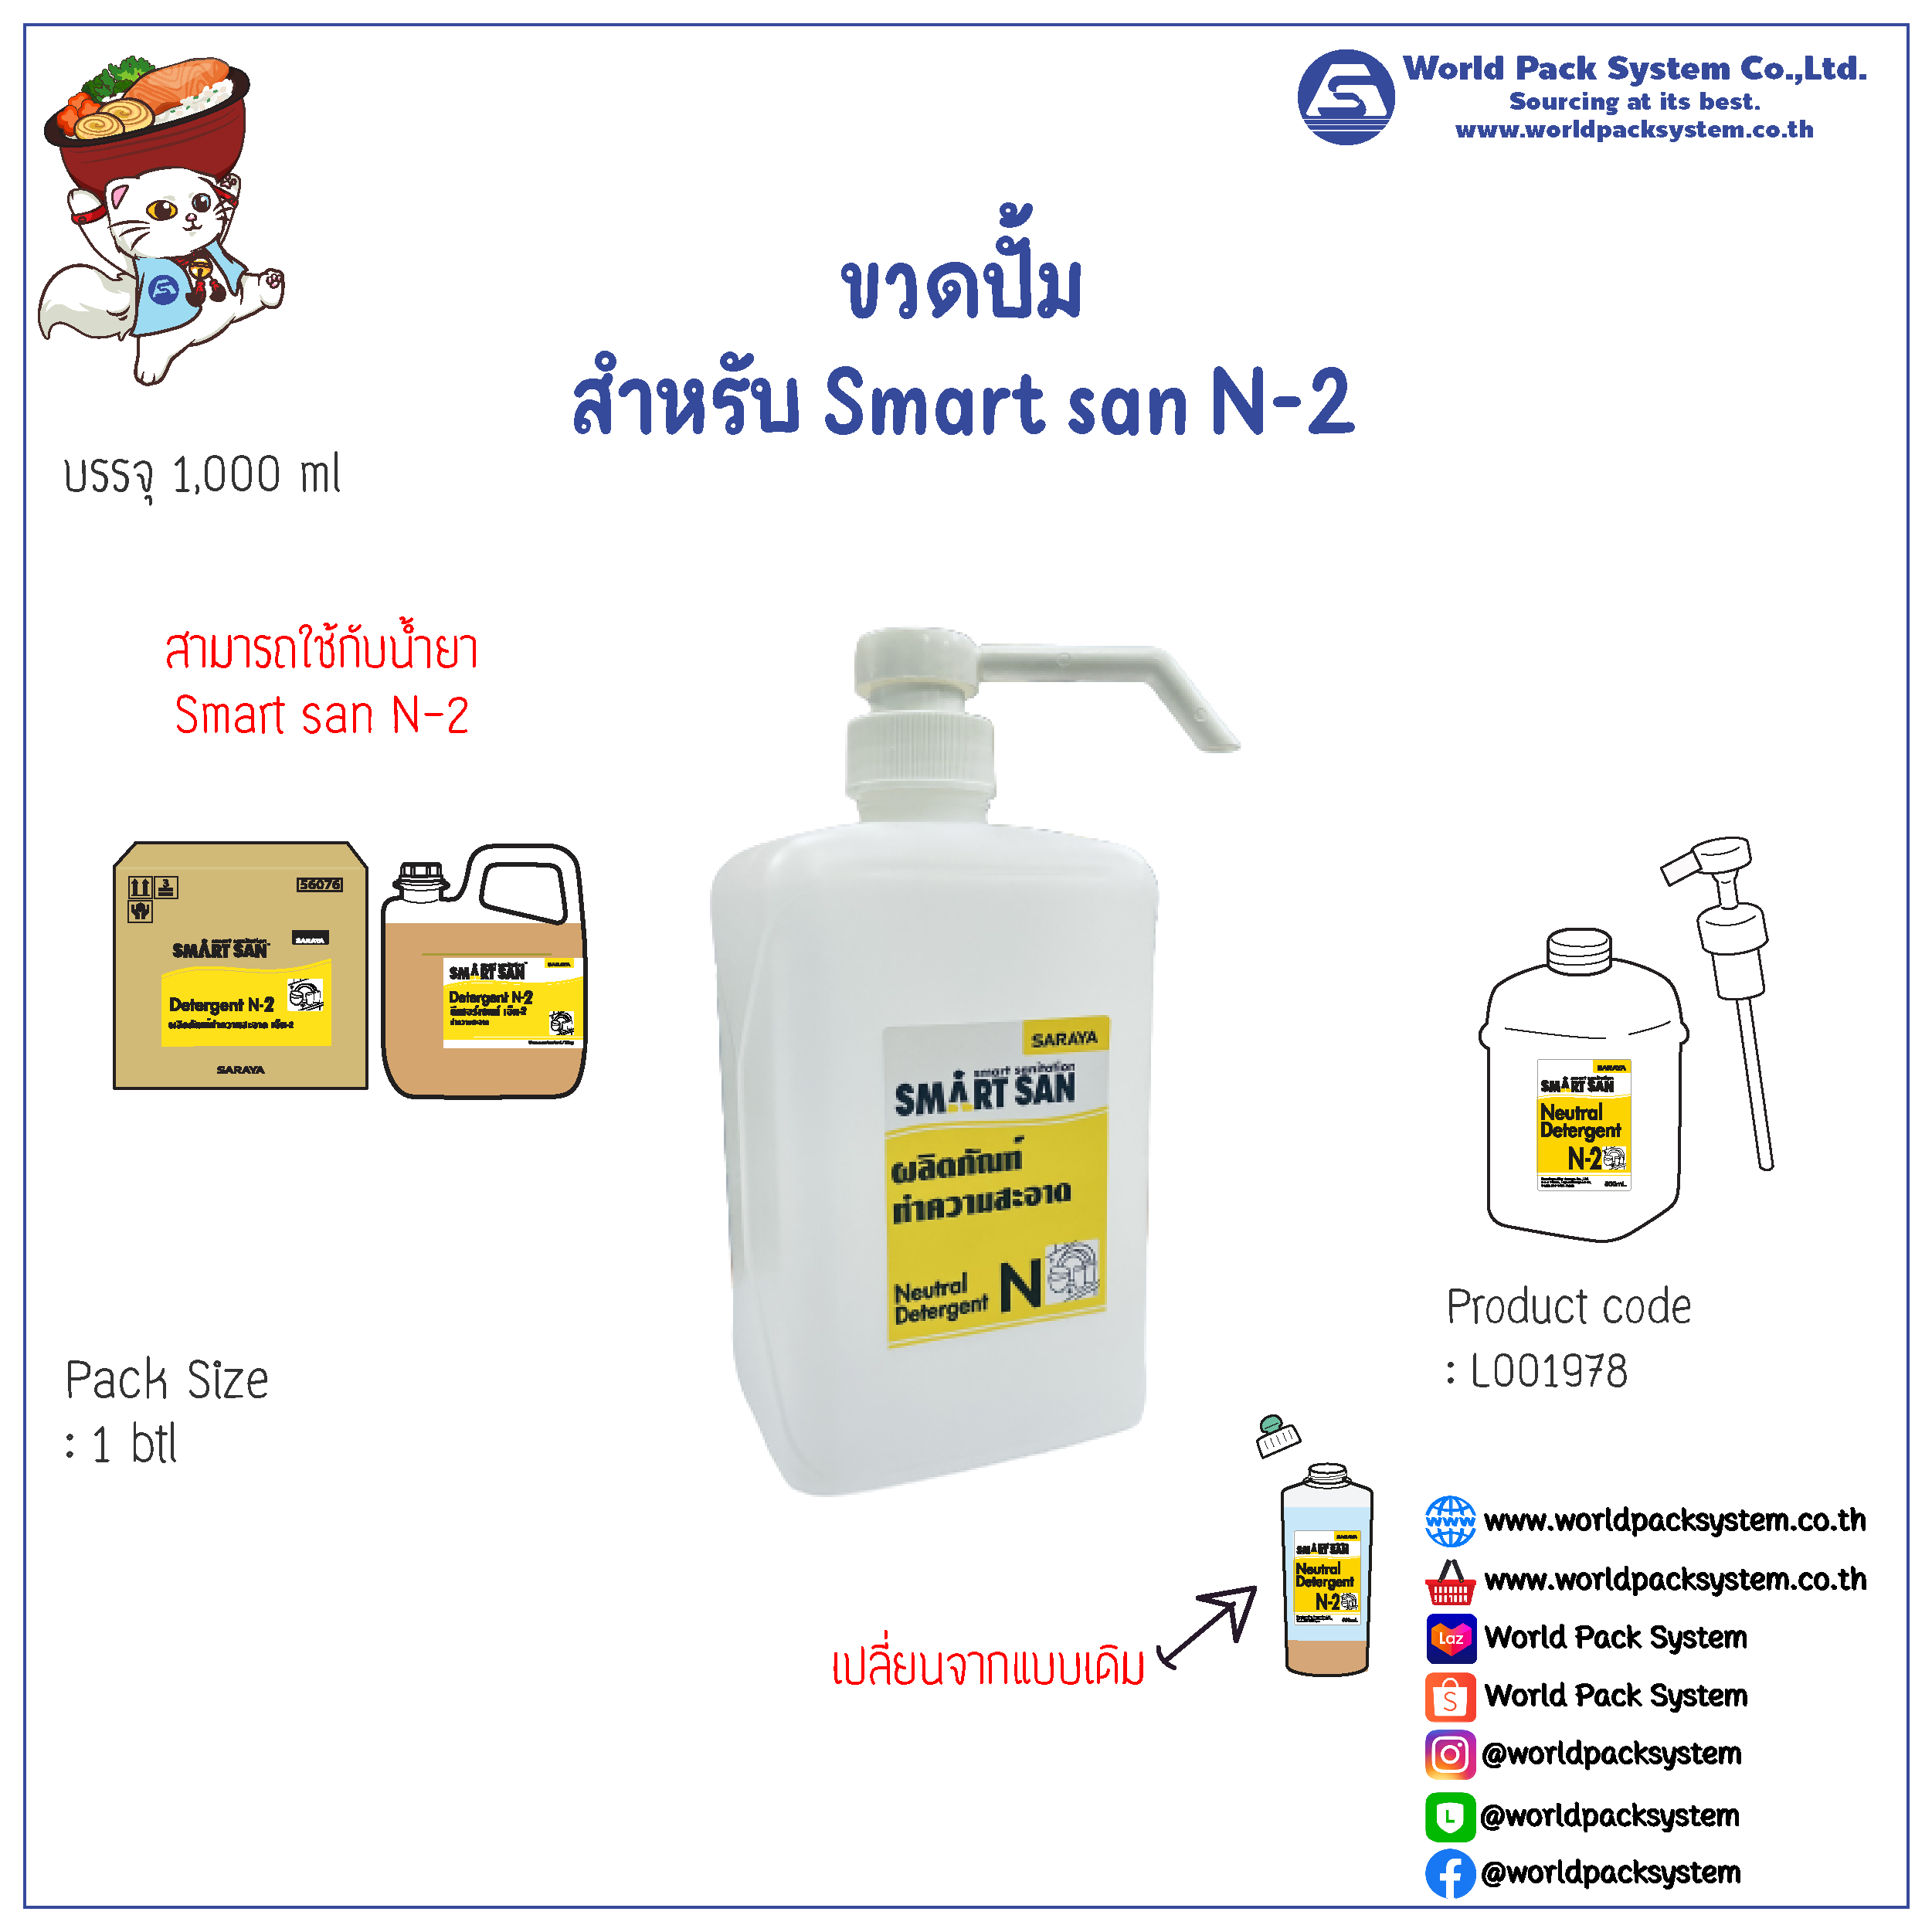 Bottle for Smart San N-2 / N-3